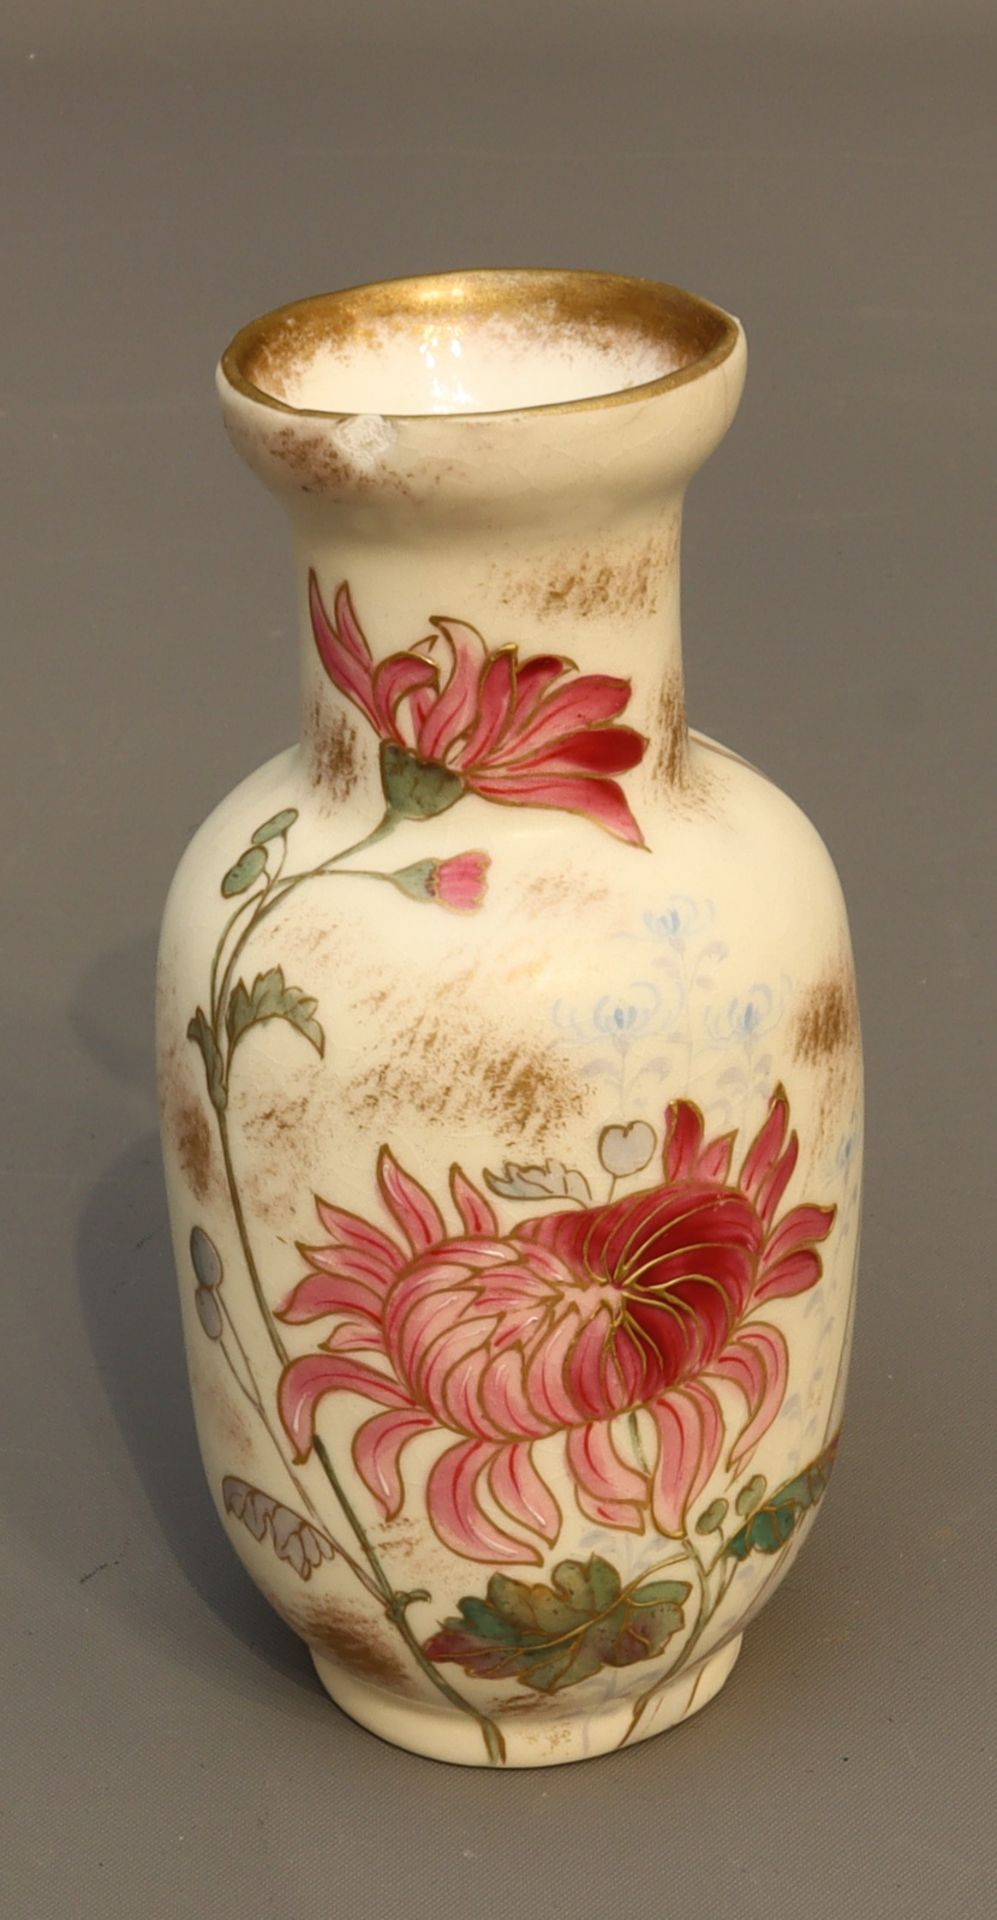 Majolica decorative bowl plus vase, Historicism circa 1880, German - Image 3 of 3